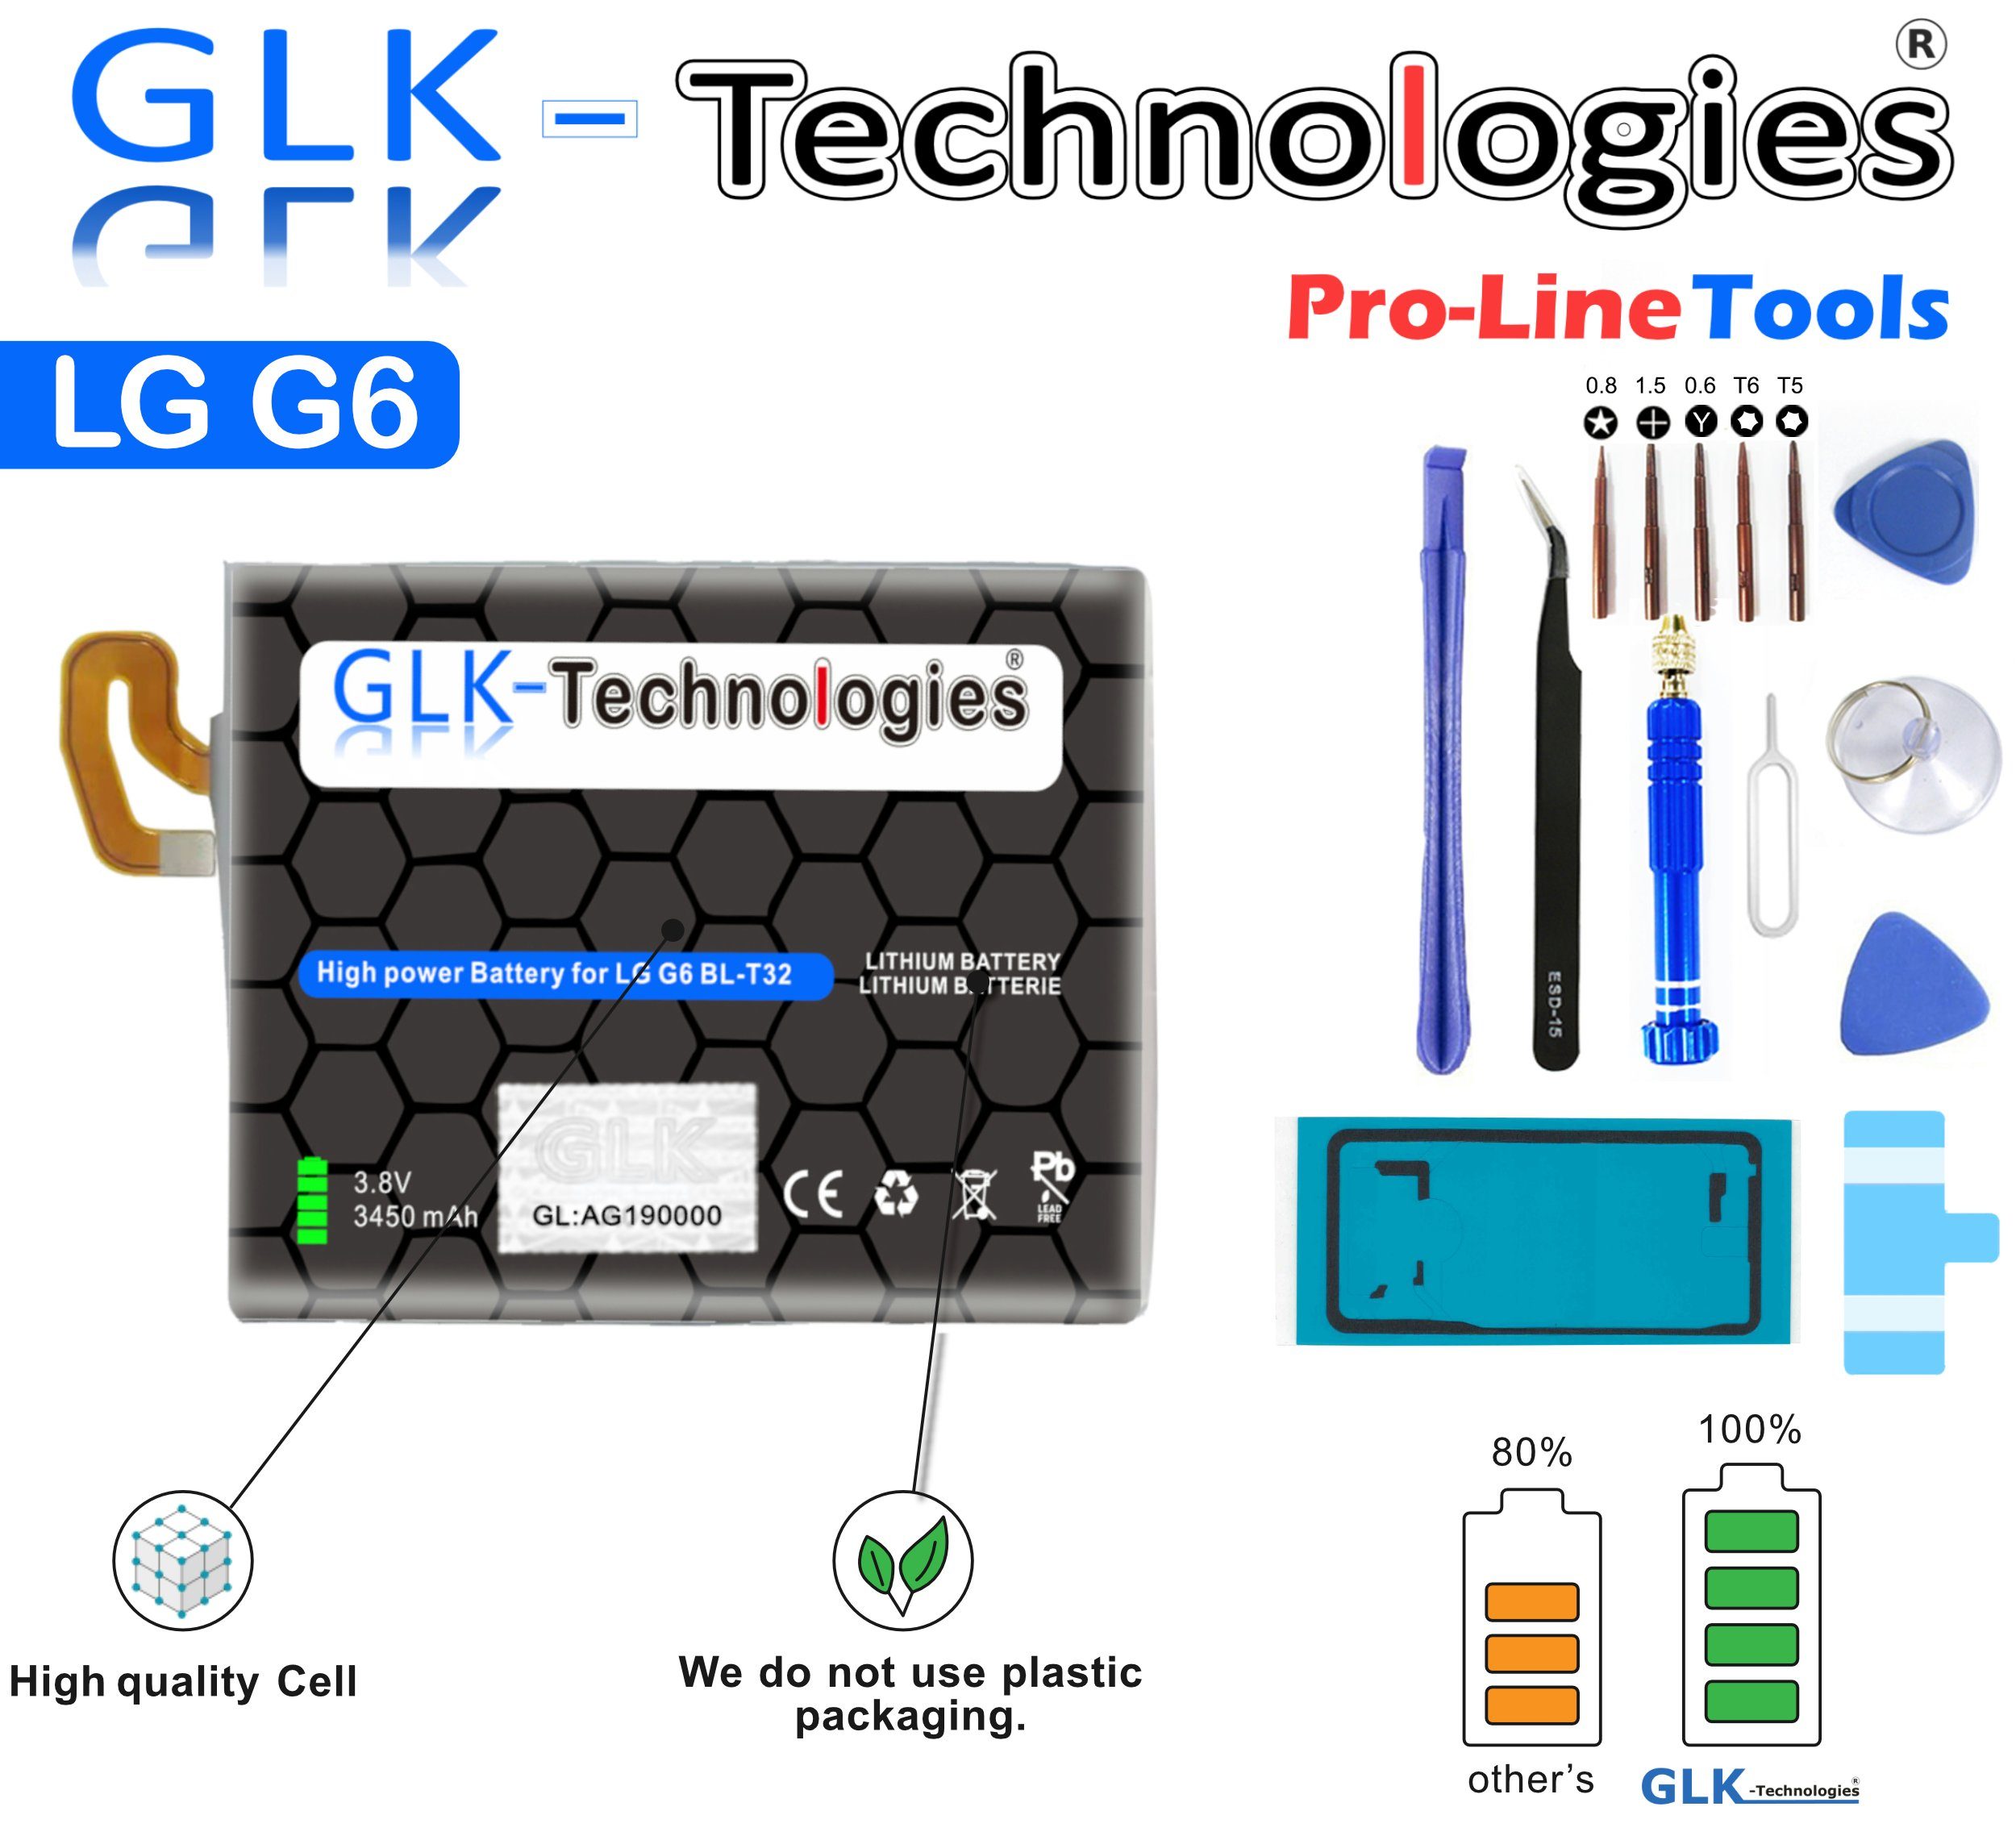 GLK-Technologies High Power Ersatzakku kompatibel mit LG G6 G6+ H870 H871 H872 LS993 VS998, GLK-Technologies Battery, accu, 3450 mAh Akku, inkl. Profi Werkzeug Set Kit Smartphone-Akku 3450 mAh (3.8 V)